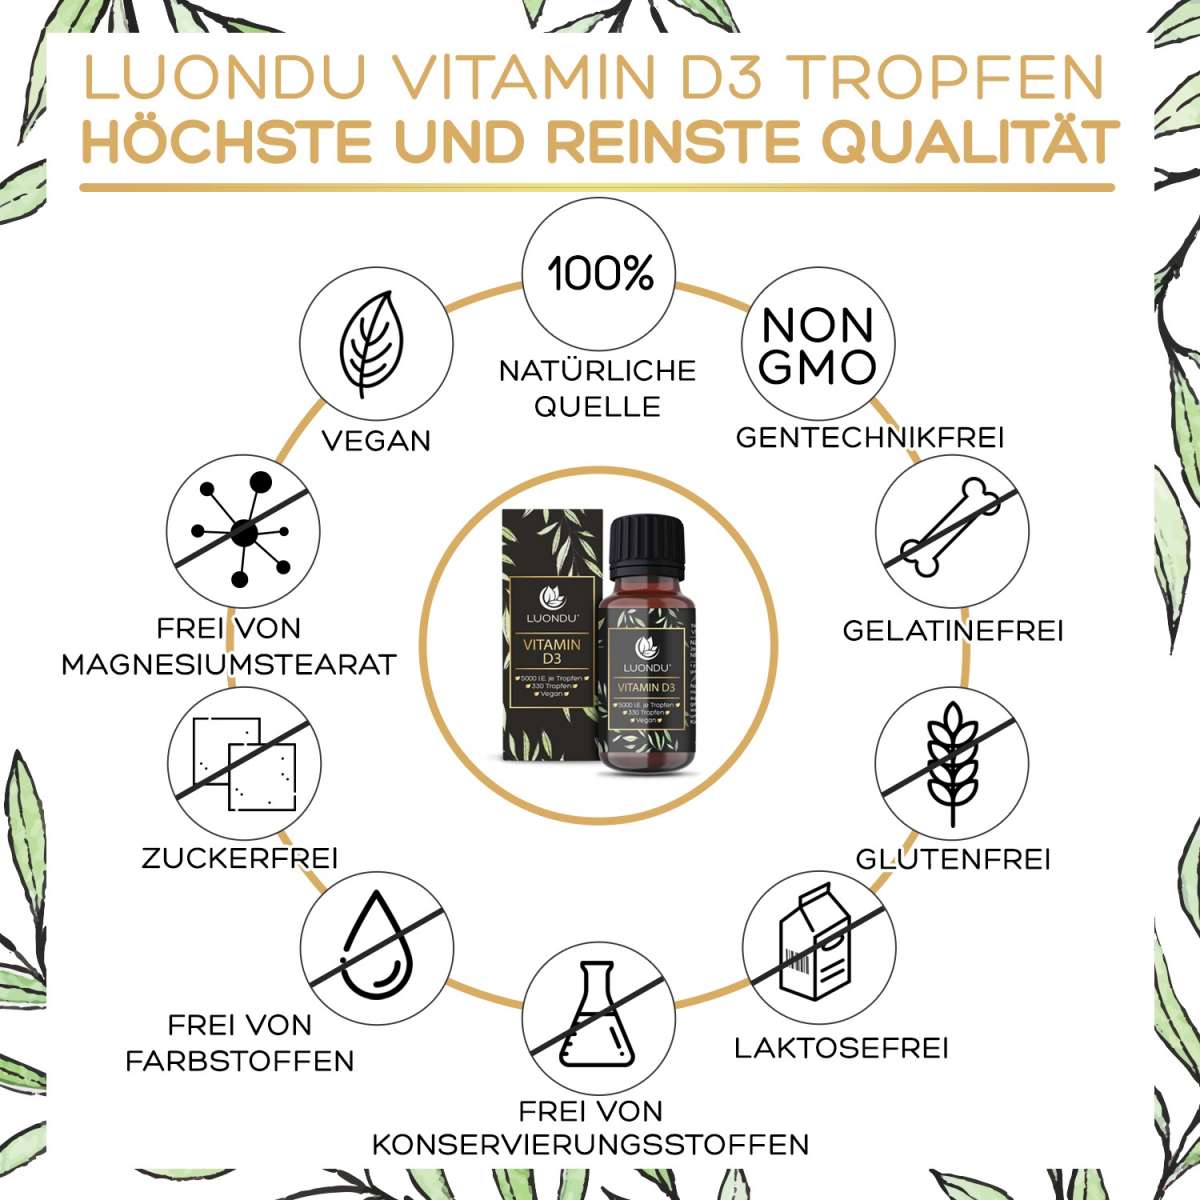 MHD Ware- Luondu Vitamin D3 5000 I.E. Vegan aus Flechten - 330 Tropfen